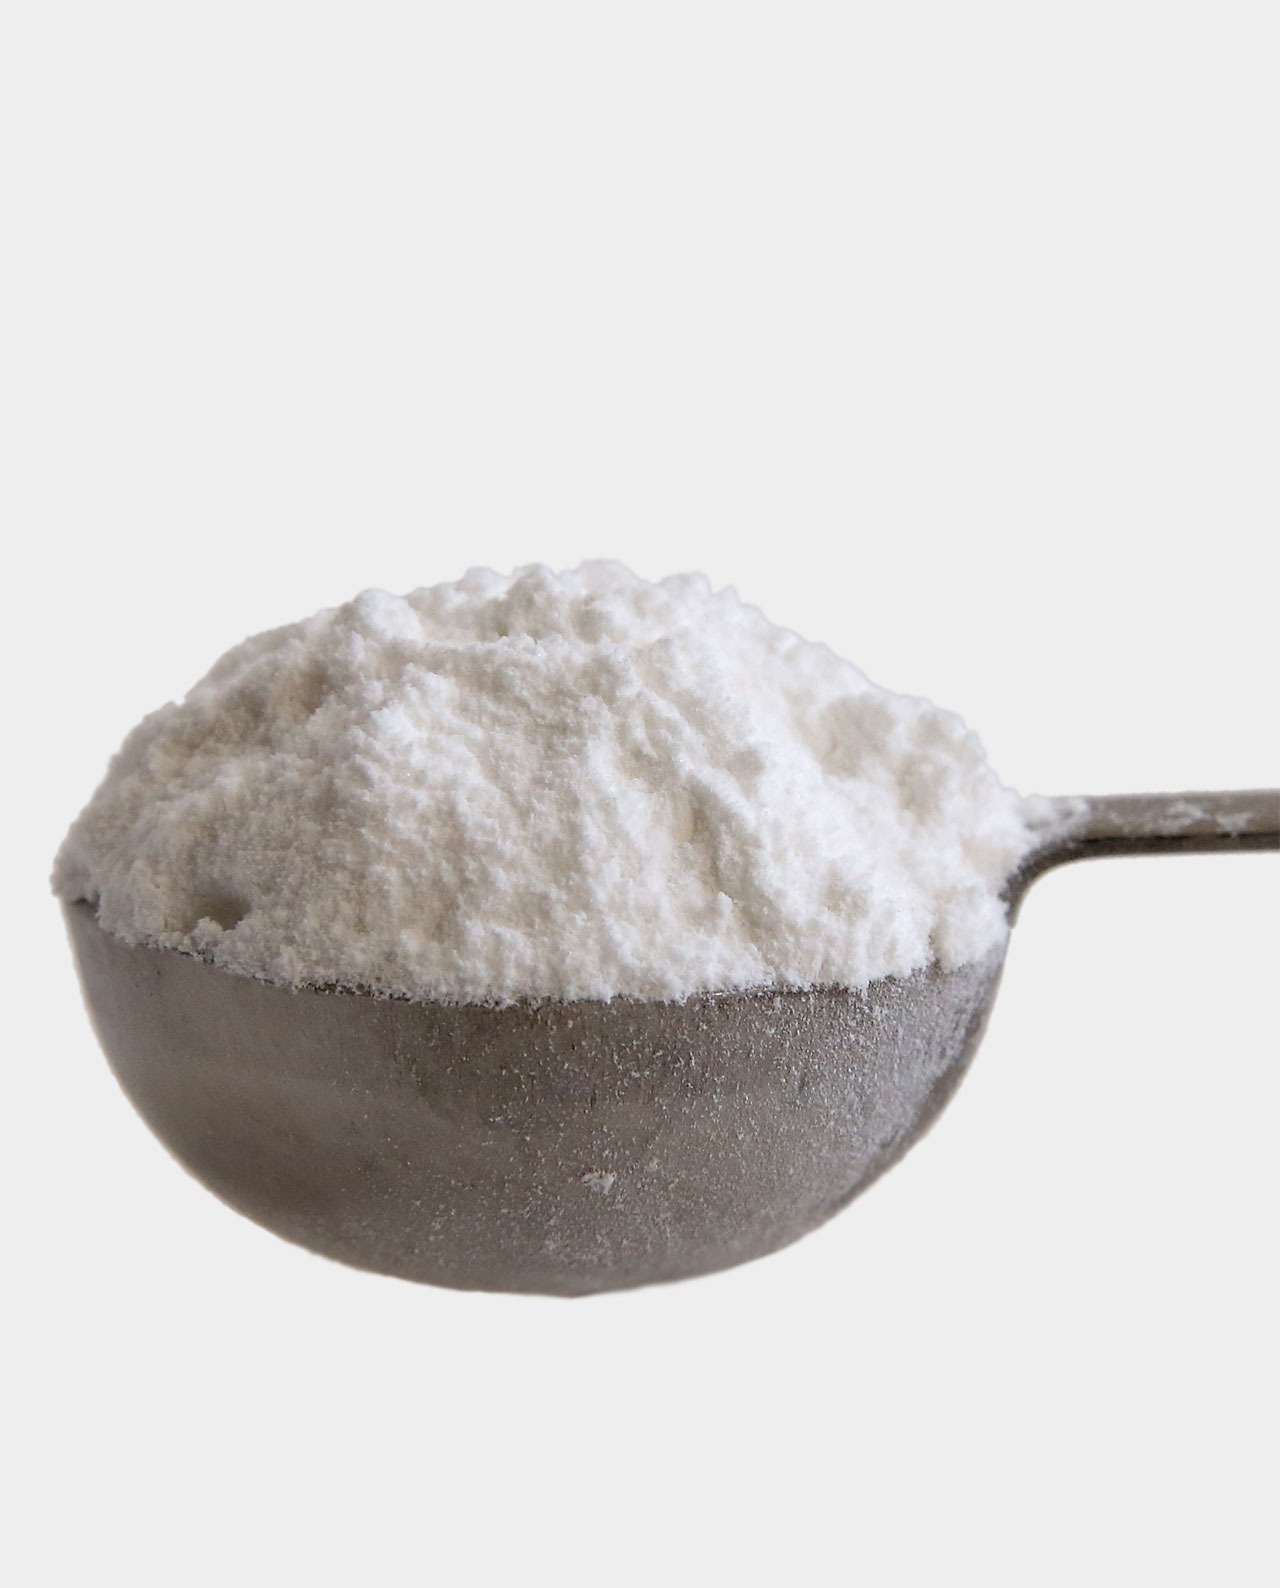 Einkorn High Extraction Flour